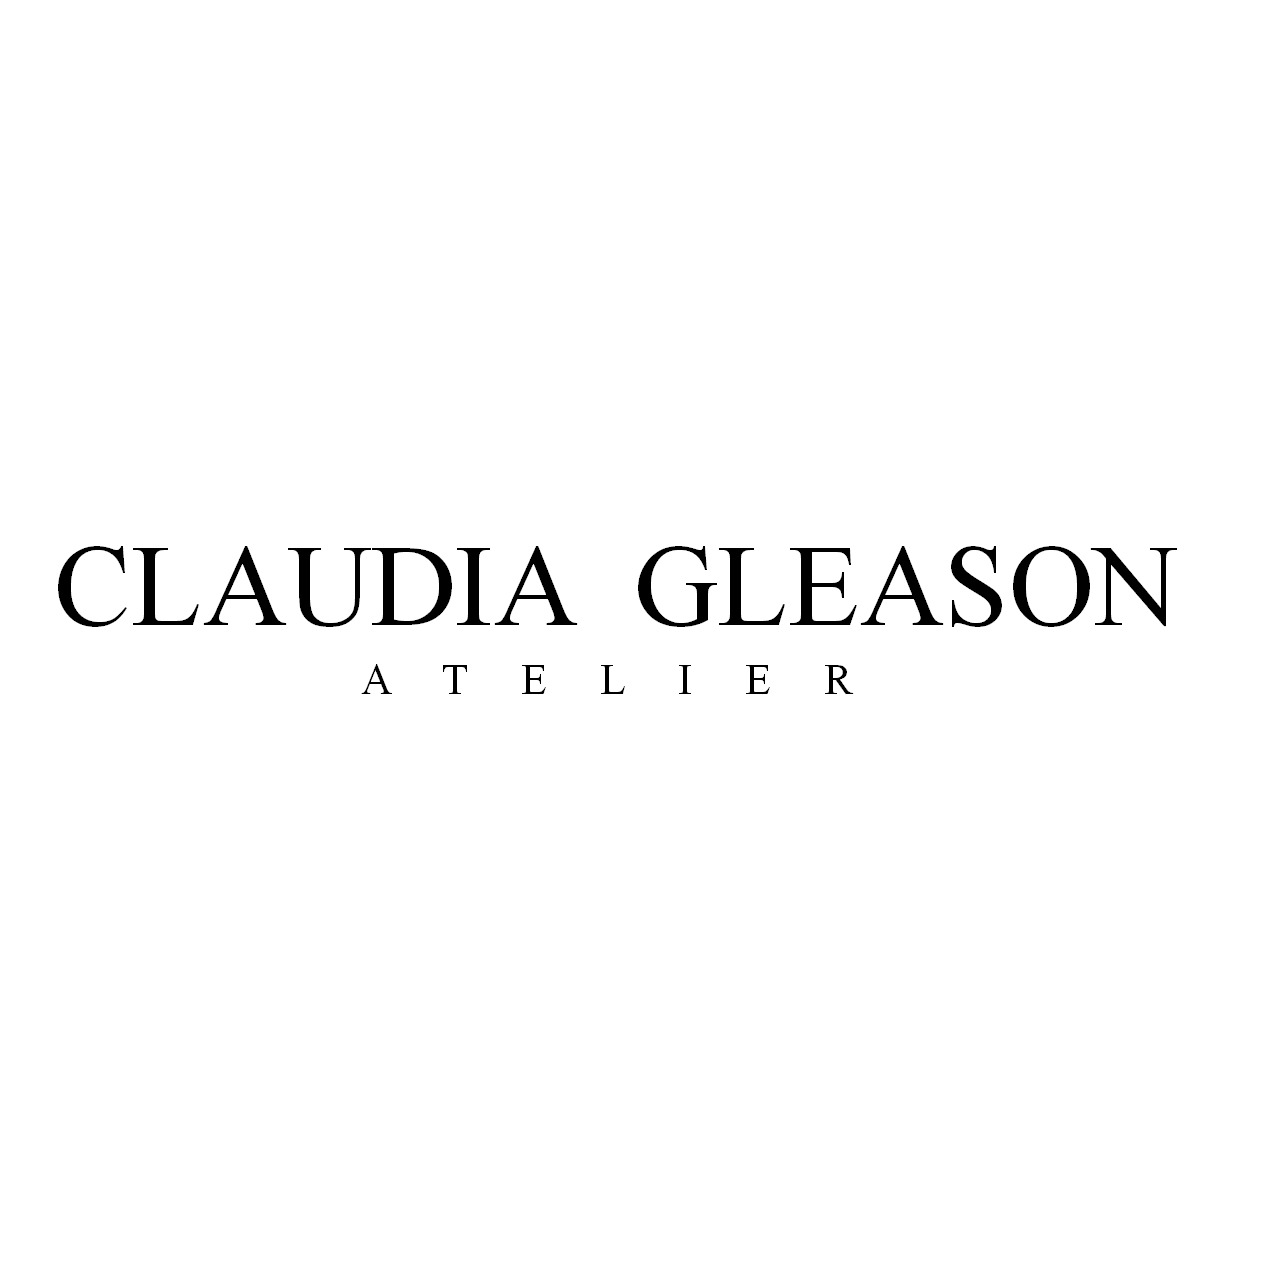 CLAUDIA GLEASON ATELIER